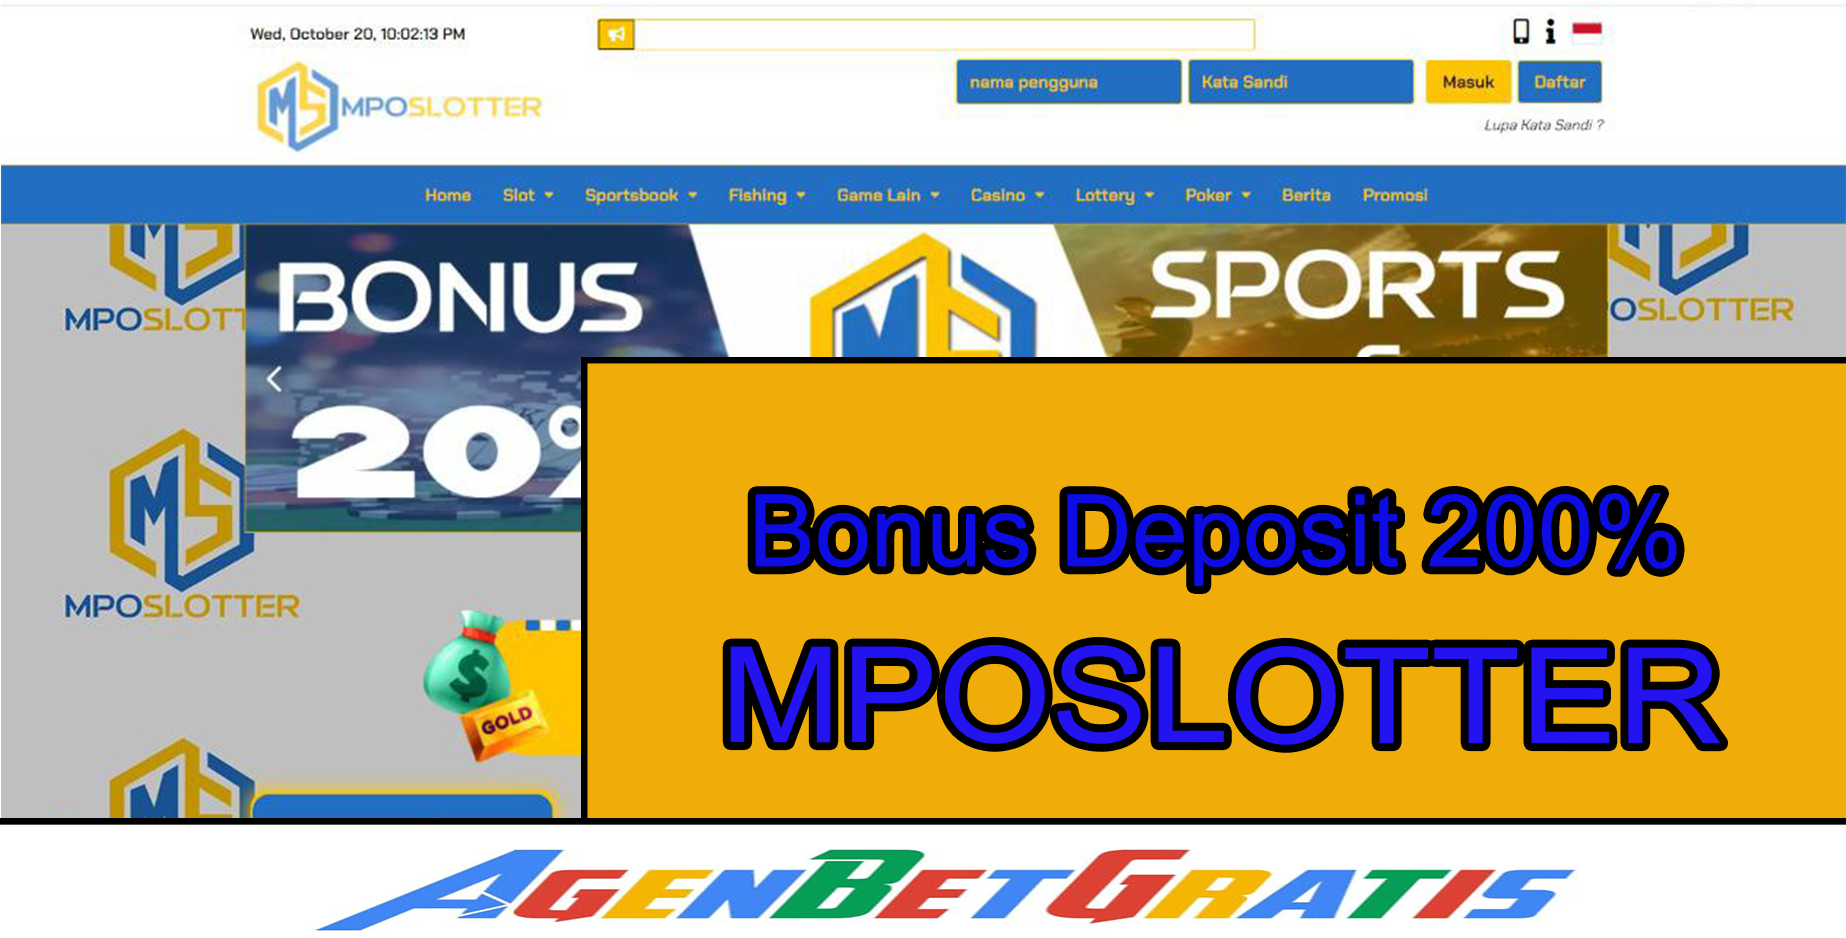 MPOSLOTTER - Bonus Deposit 200%